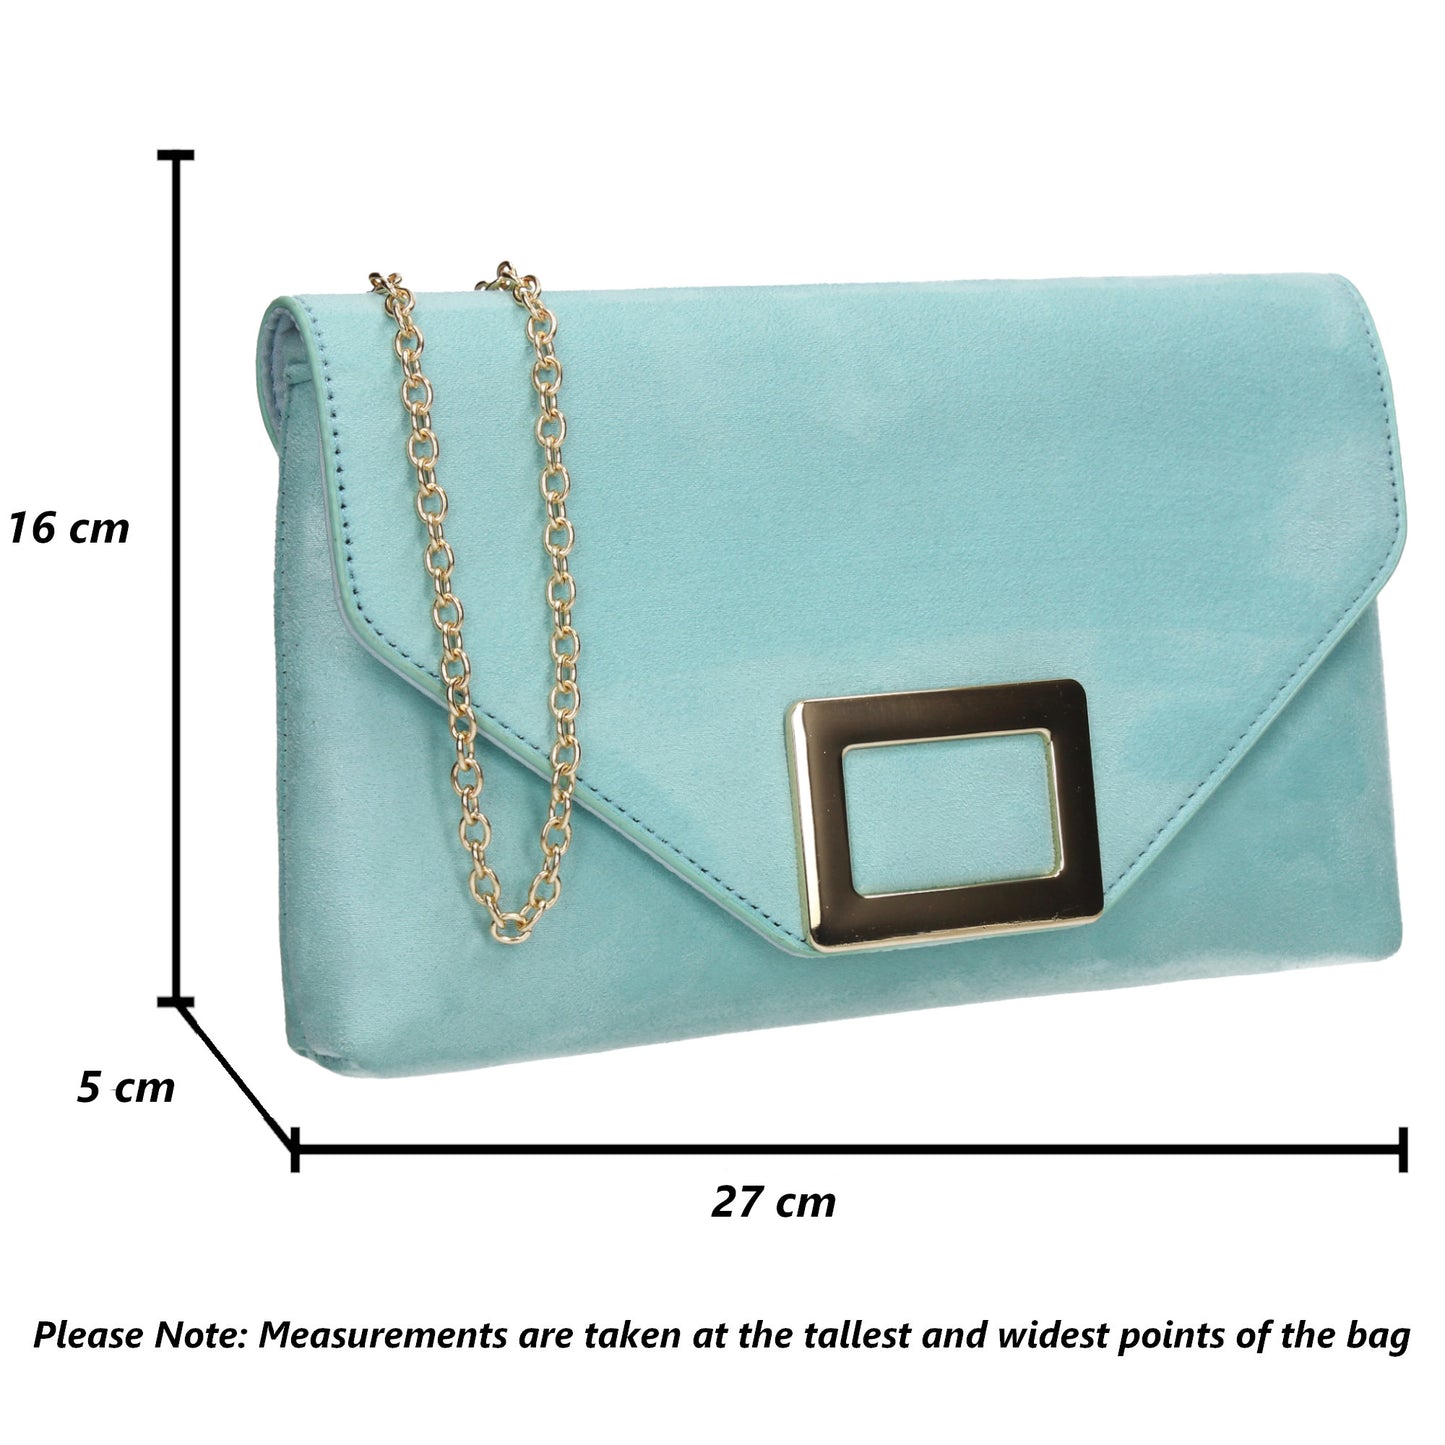 SWANKYSWANS Georgia Clutch Bag Mint Blue Cute Cheap Clutch Bag For Weddings School and Work